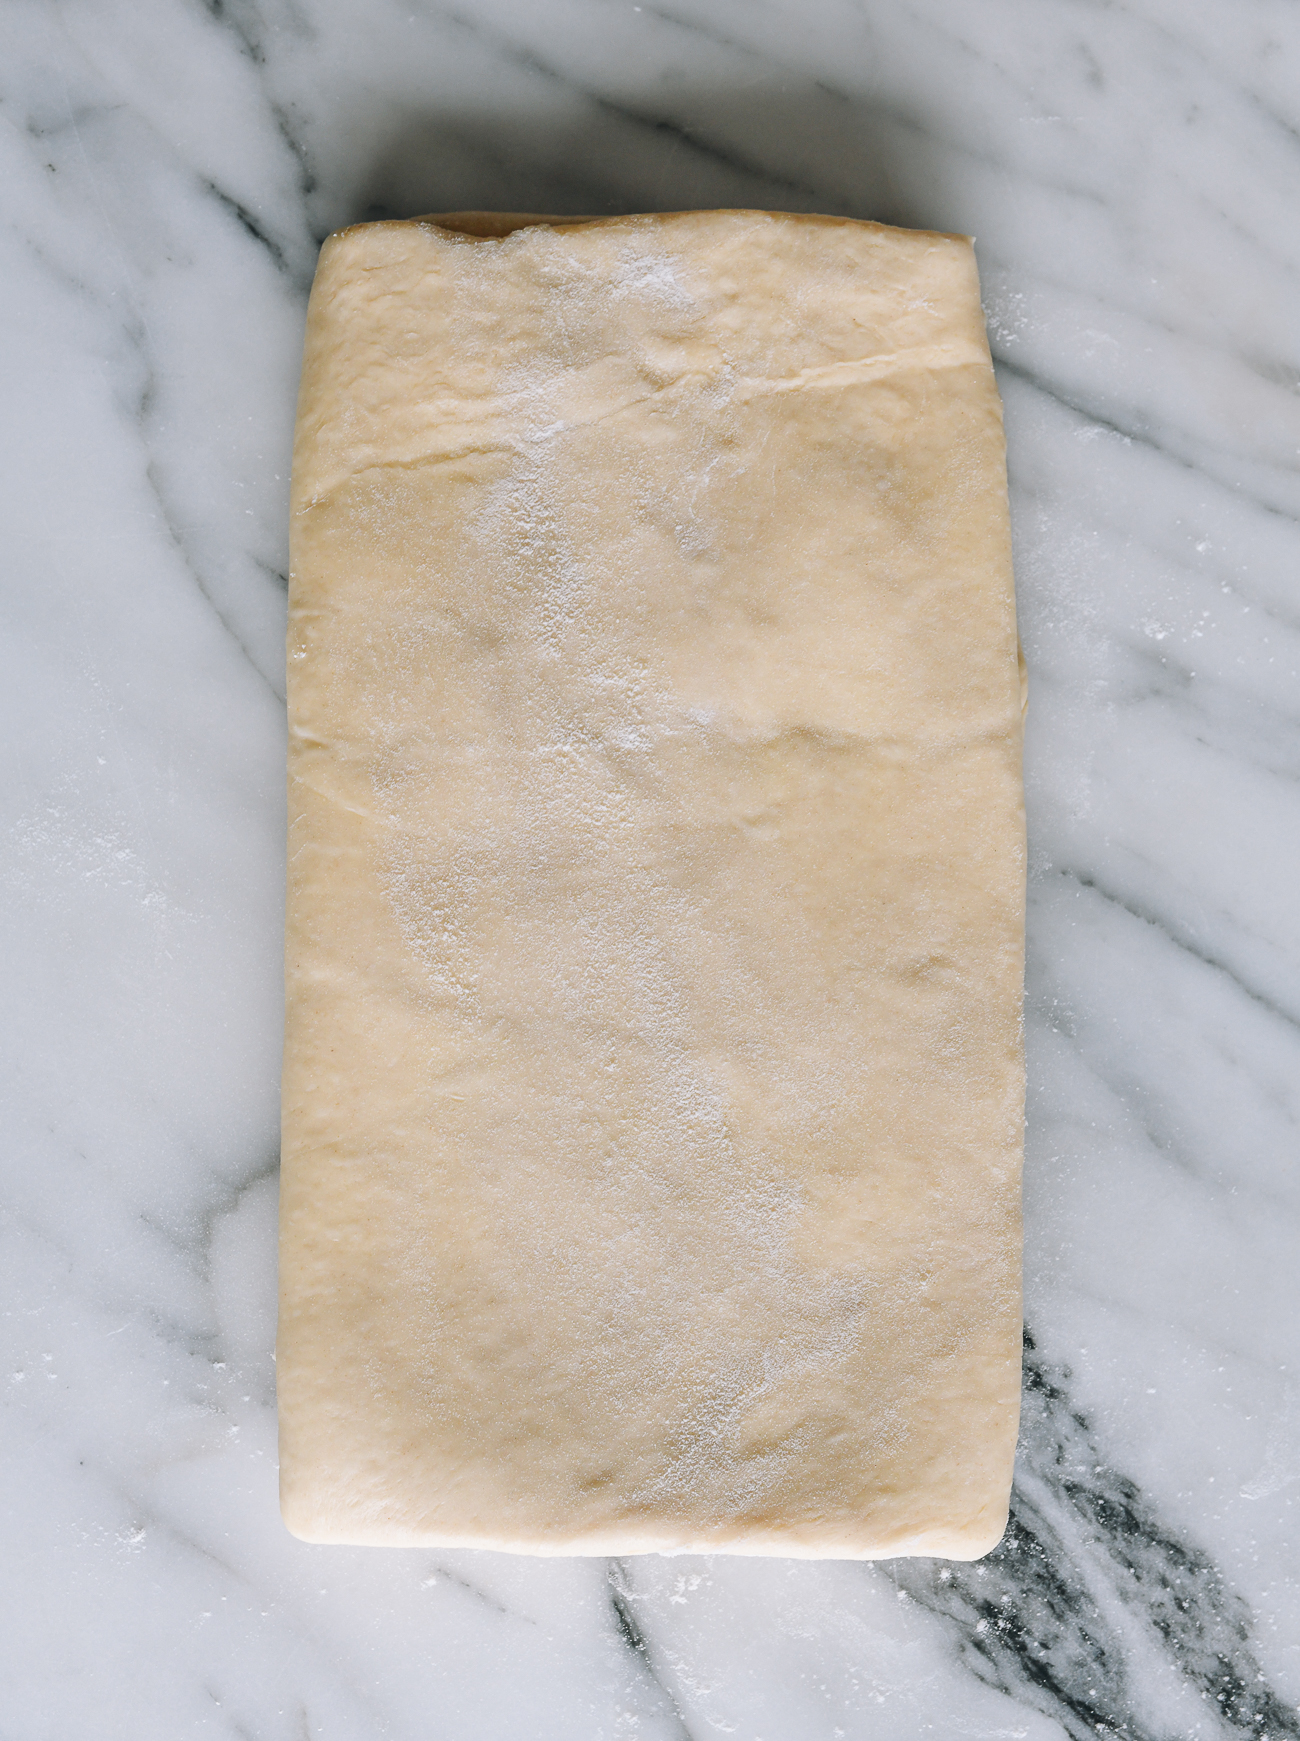 Dough rectangle folded into thirds